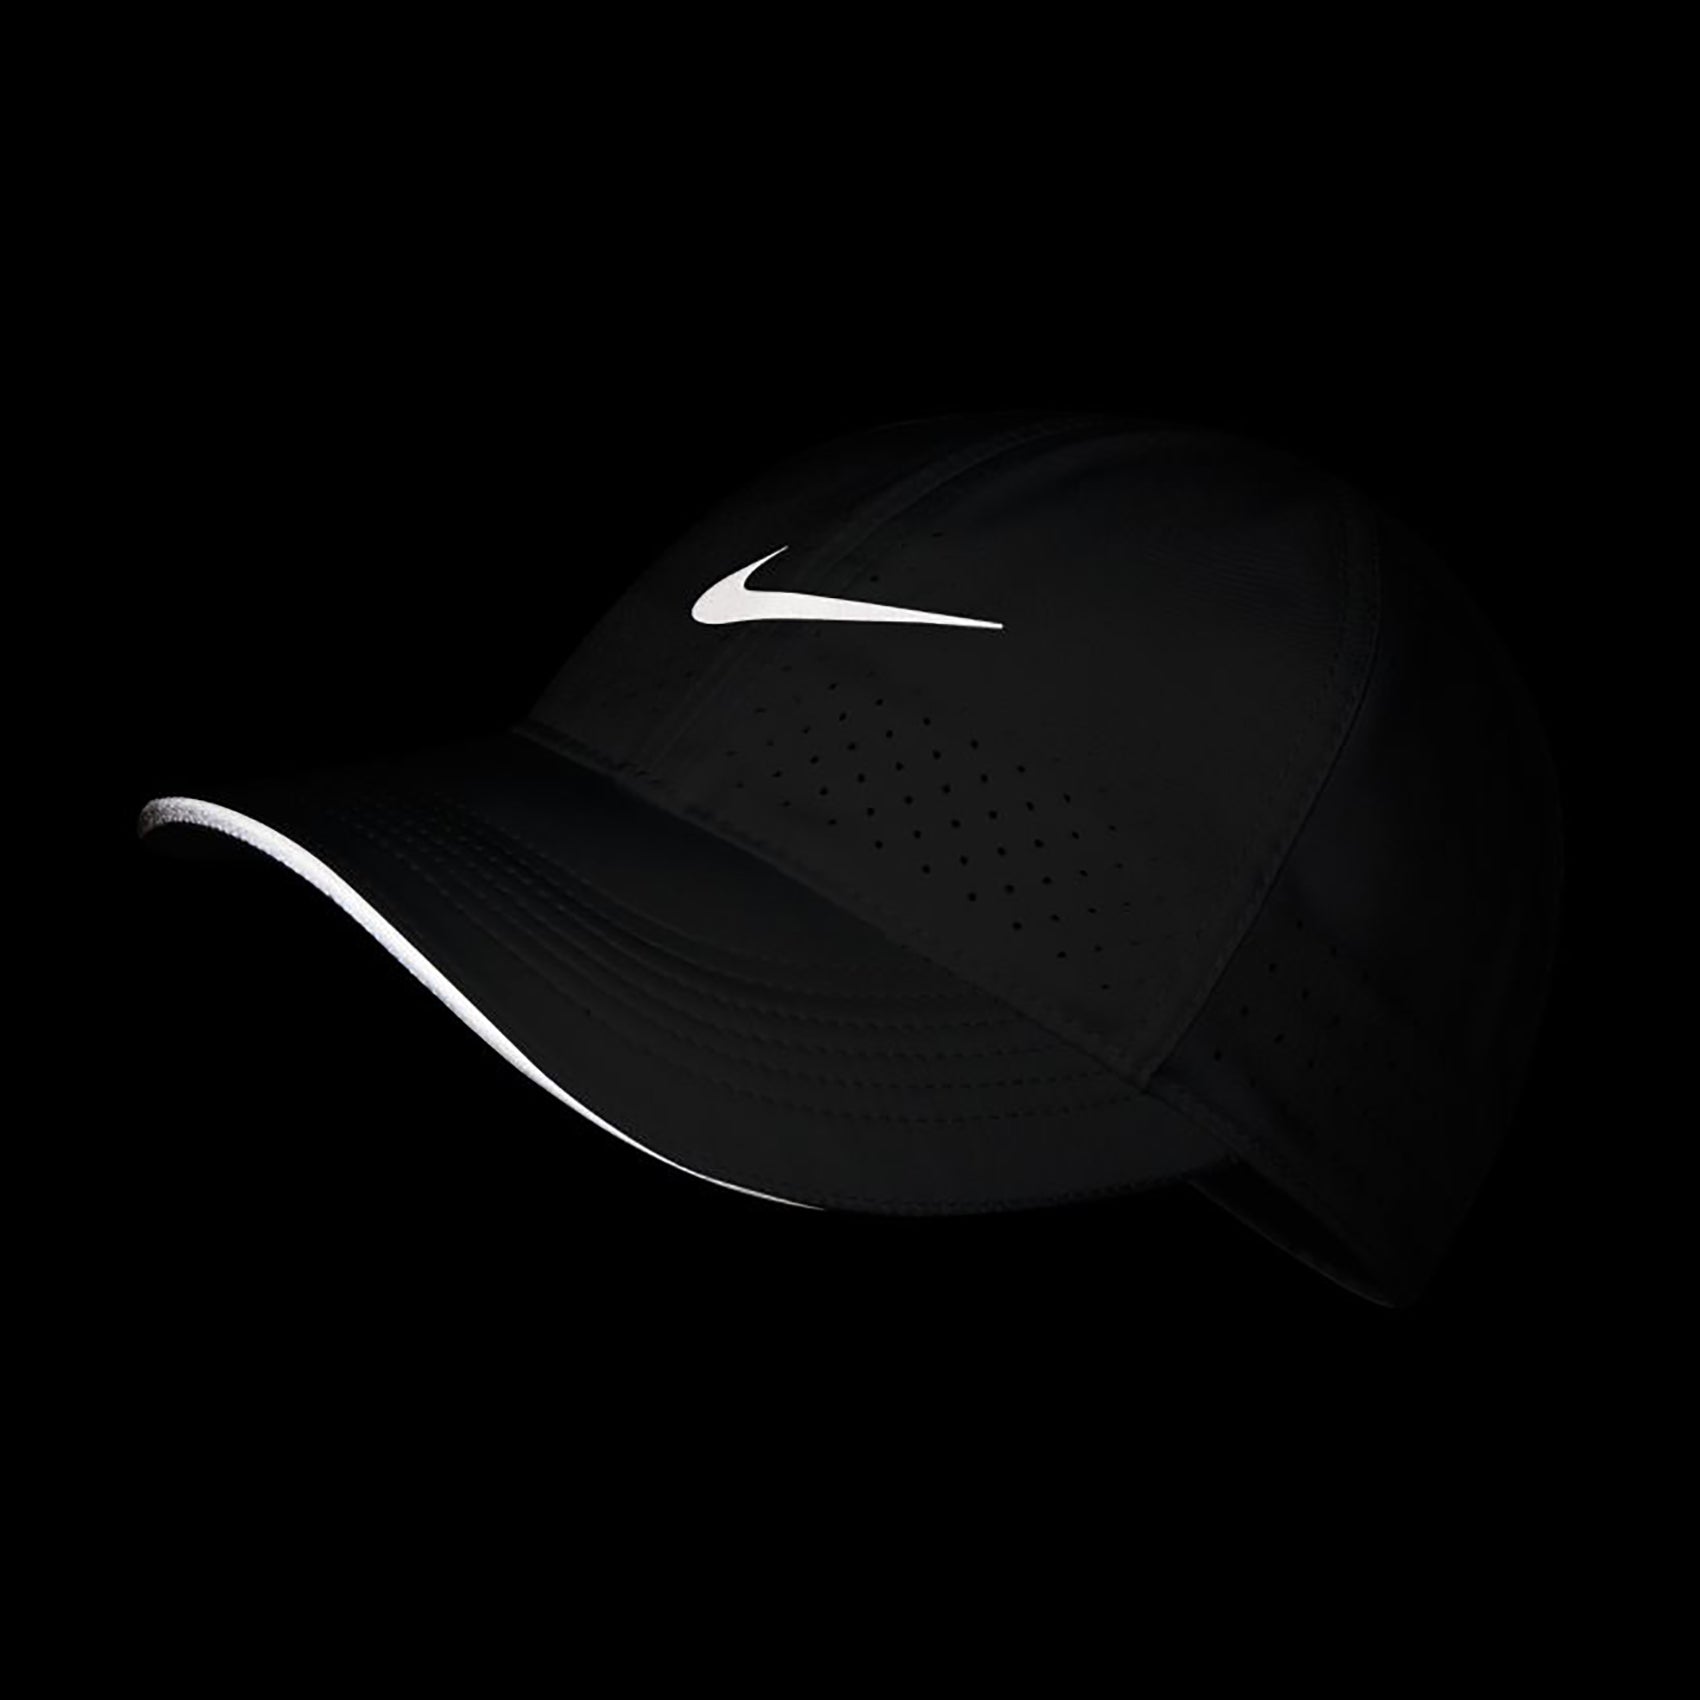 Nike AeroBill Featherlight Cap - Black / Black / White